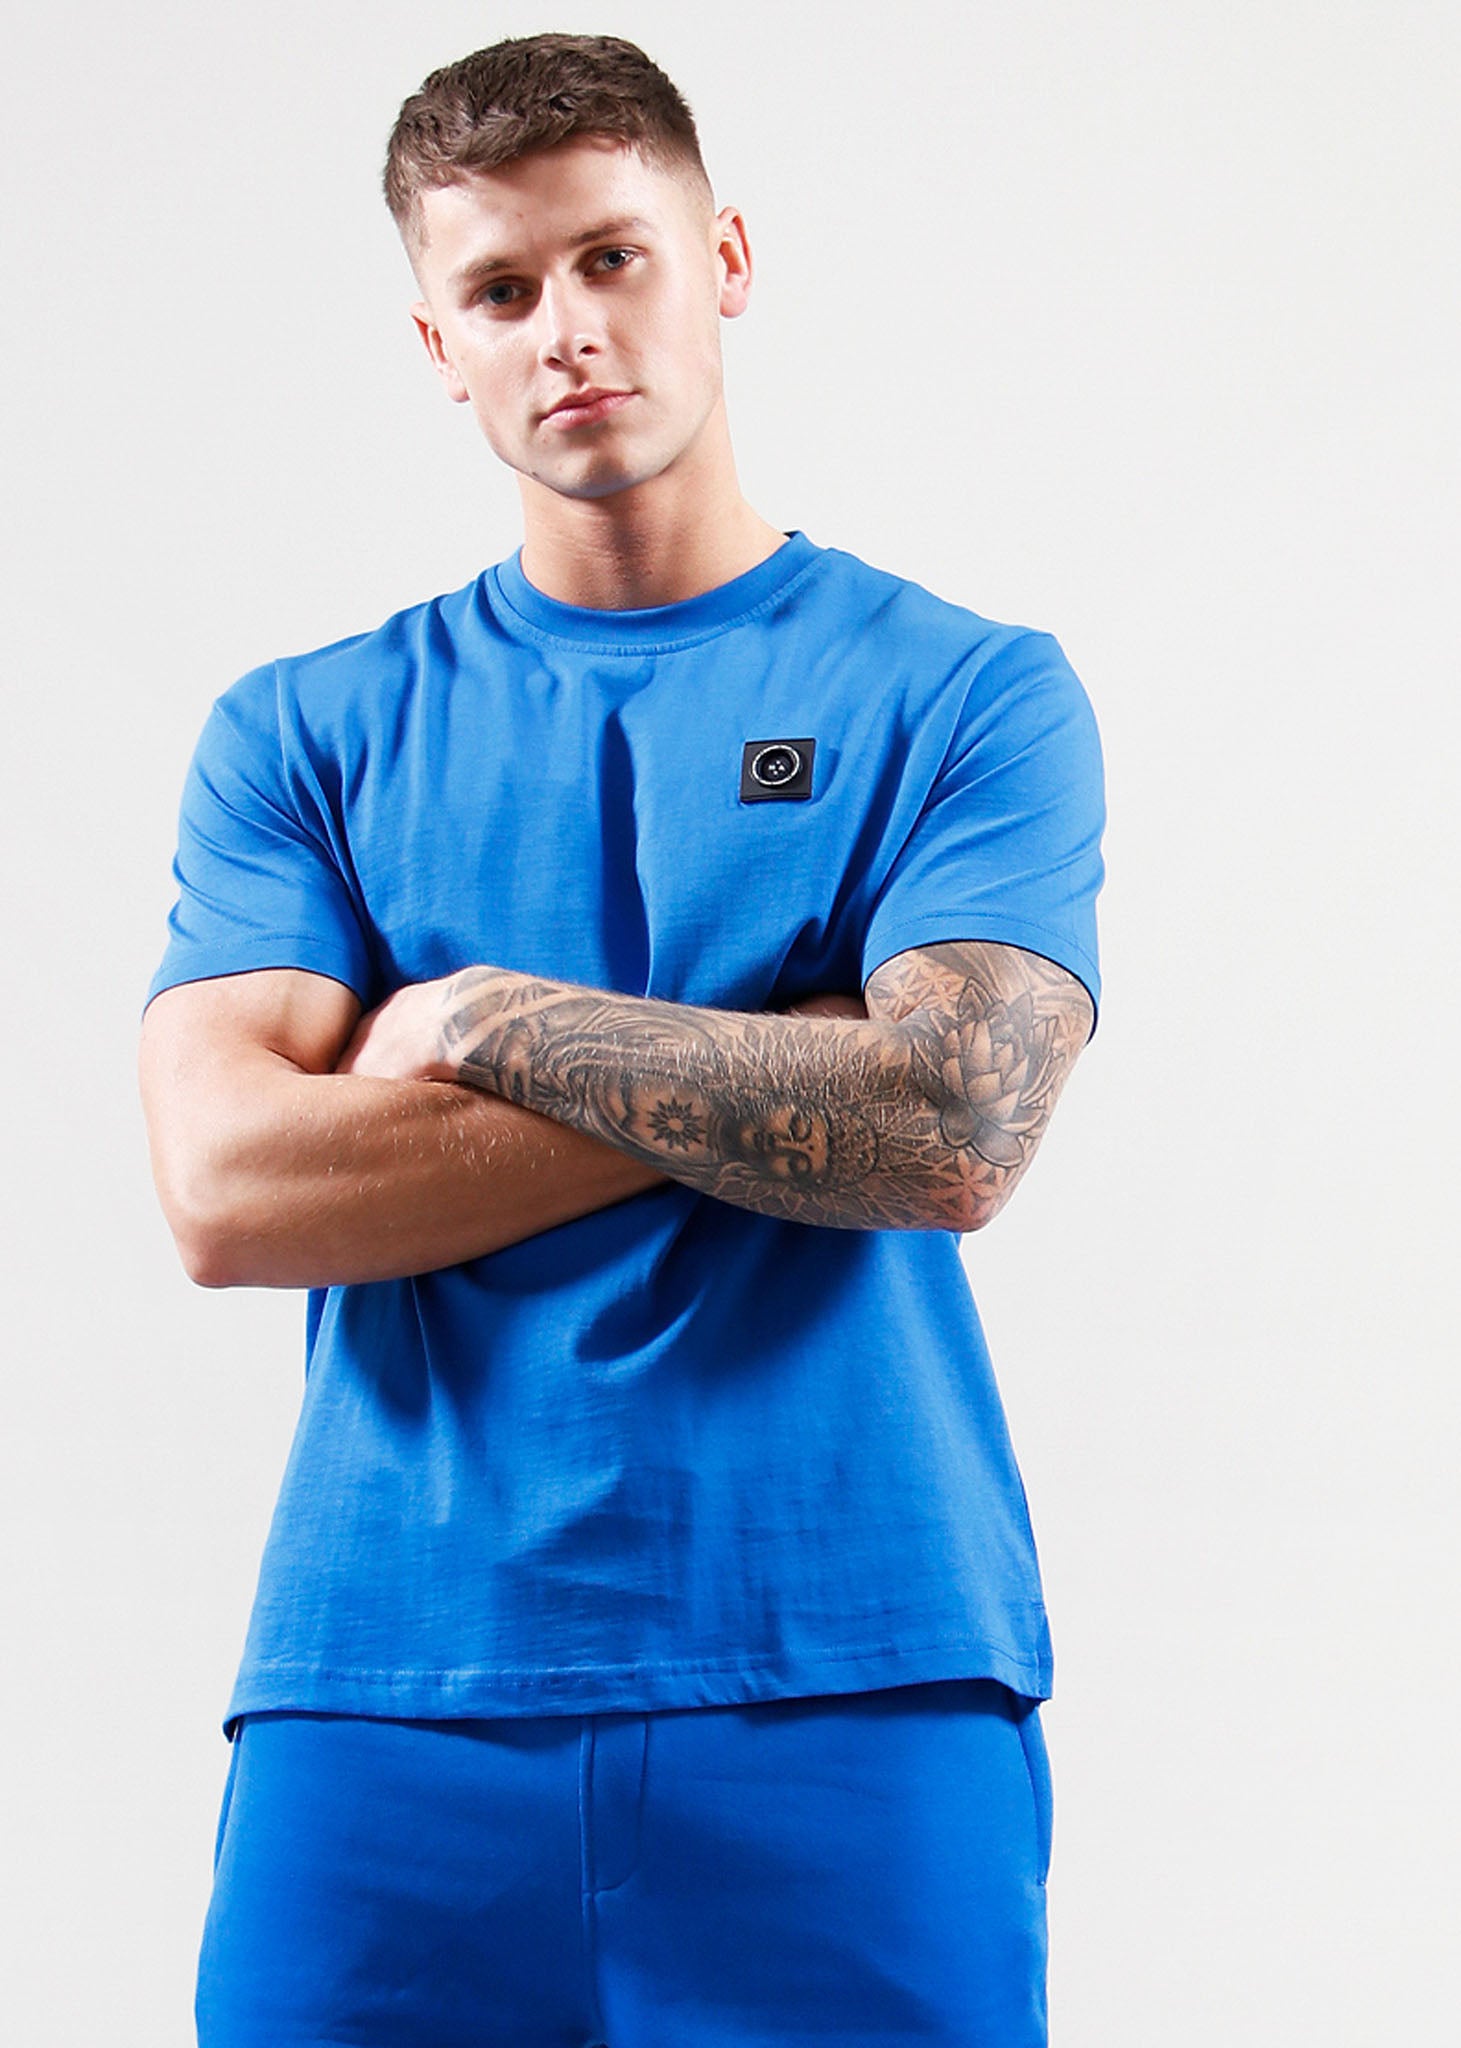 Marshall Artist T-shirts  Siren t-shirt - radial blue 